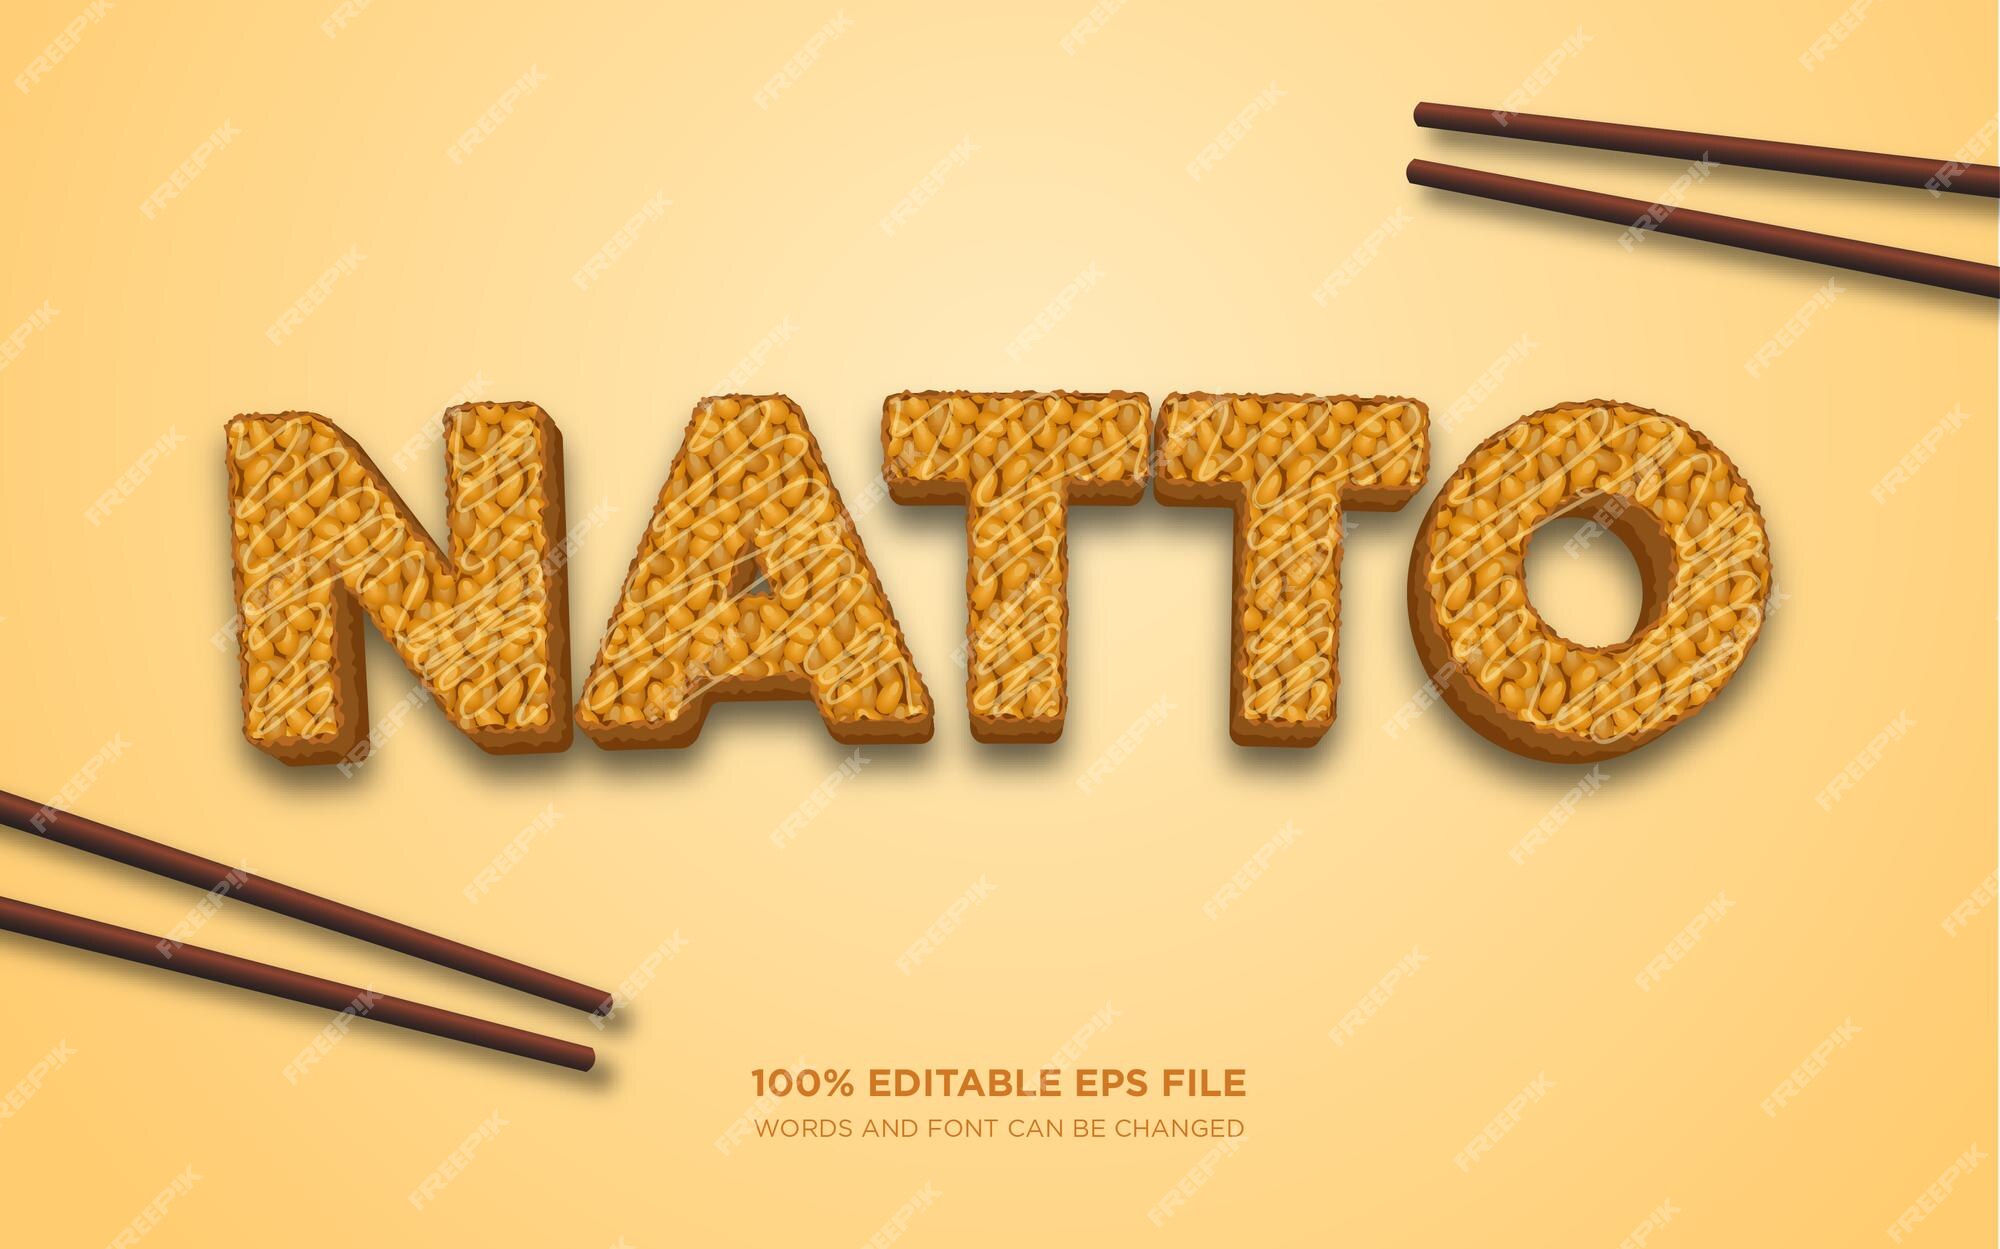 NattoPro Max